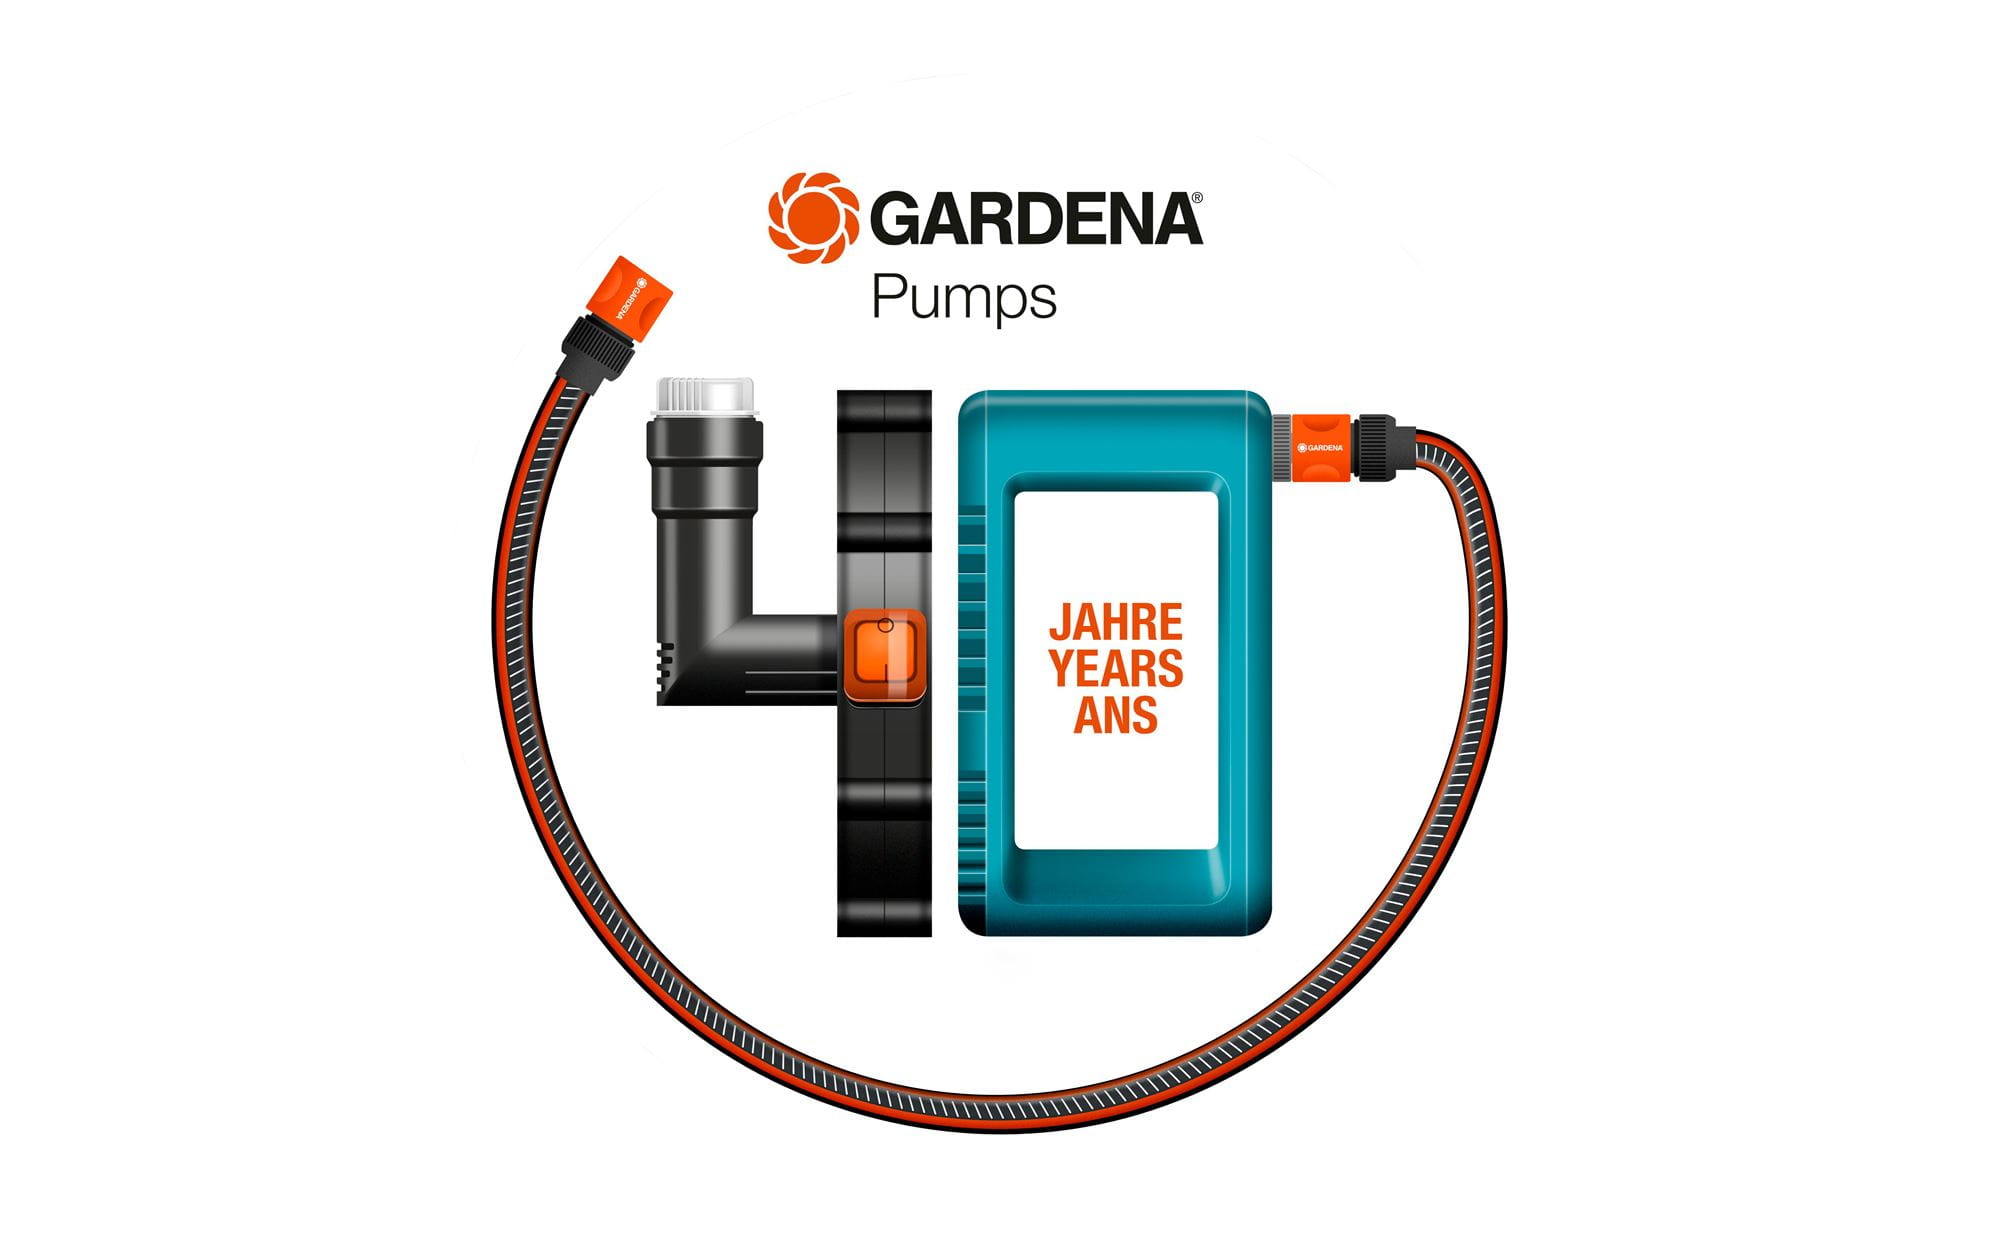 GARDENA - 40 years of innovation experience